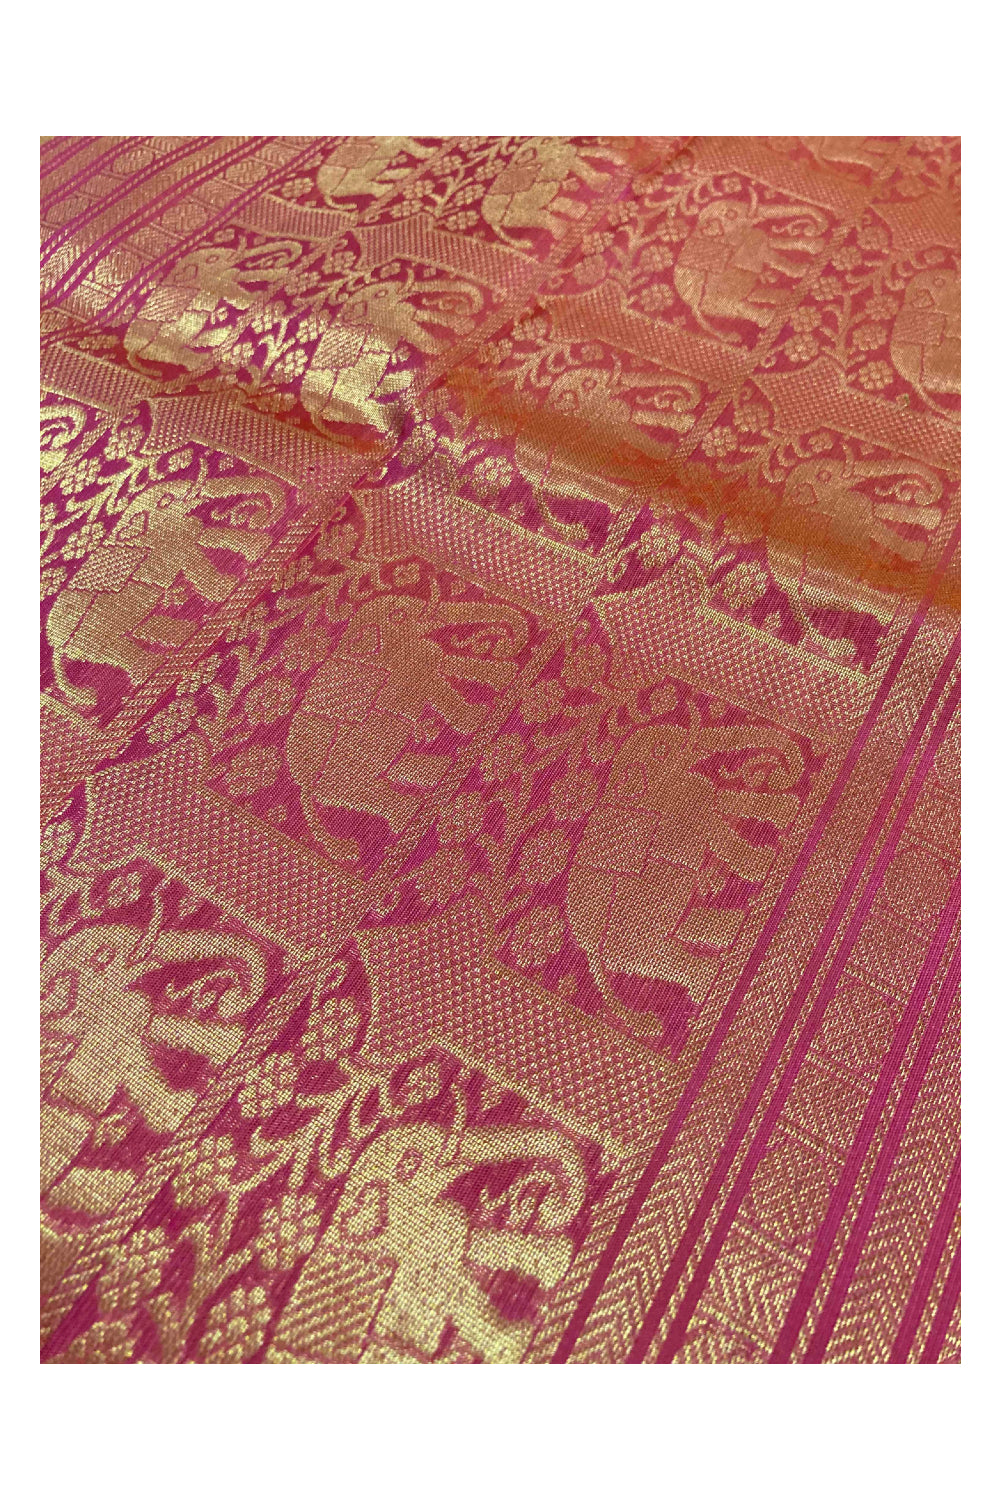 Southloom Handloom Pure Silk Kanchipuram Saree in Violet Elephant Motifs